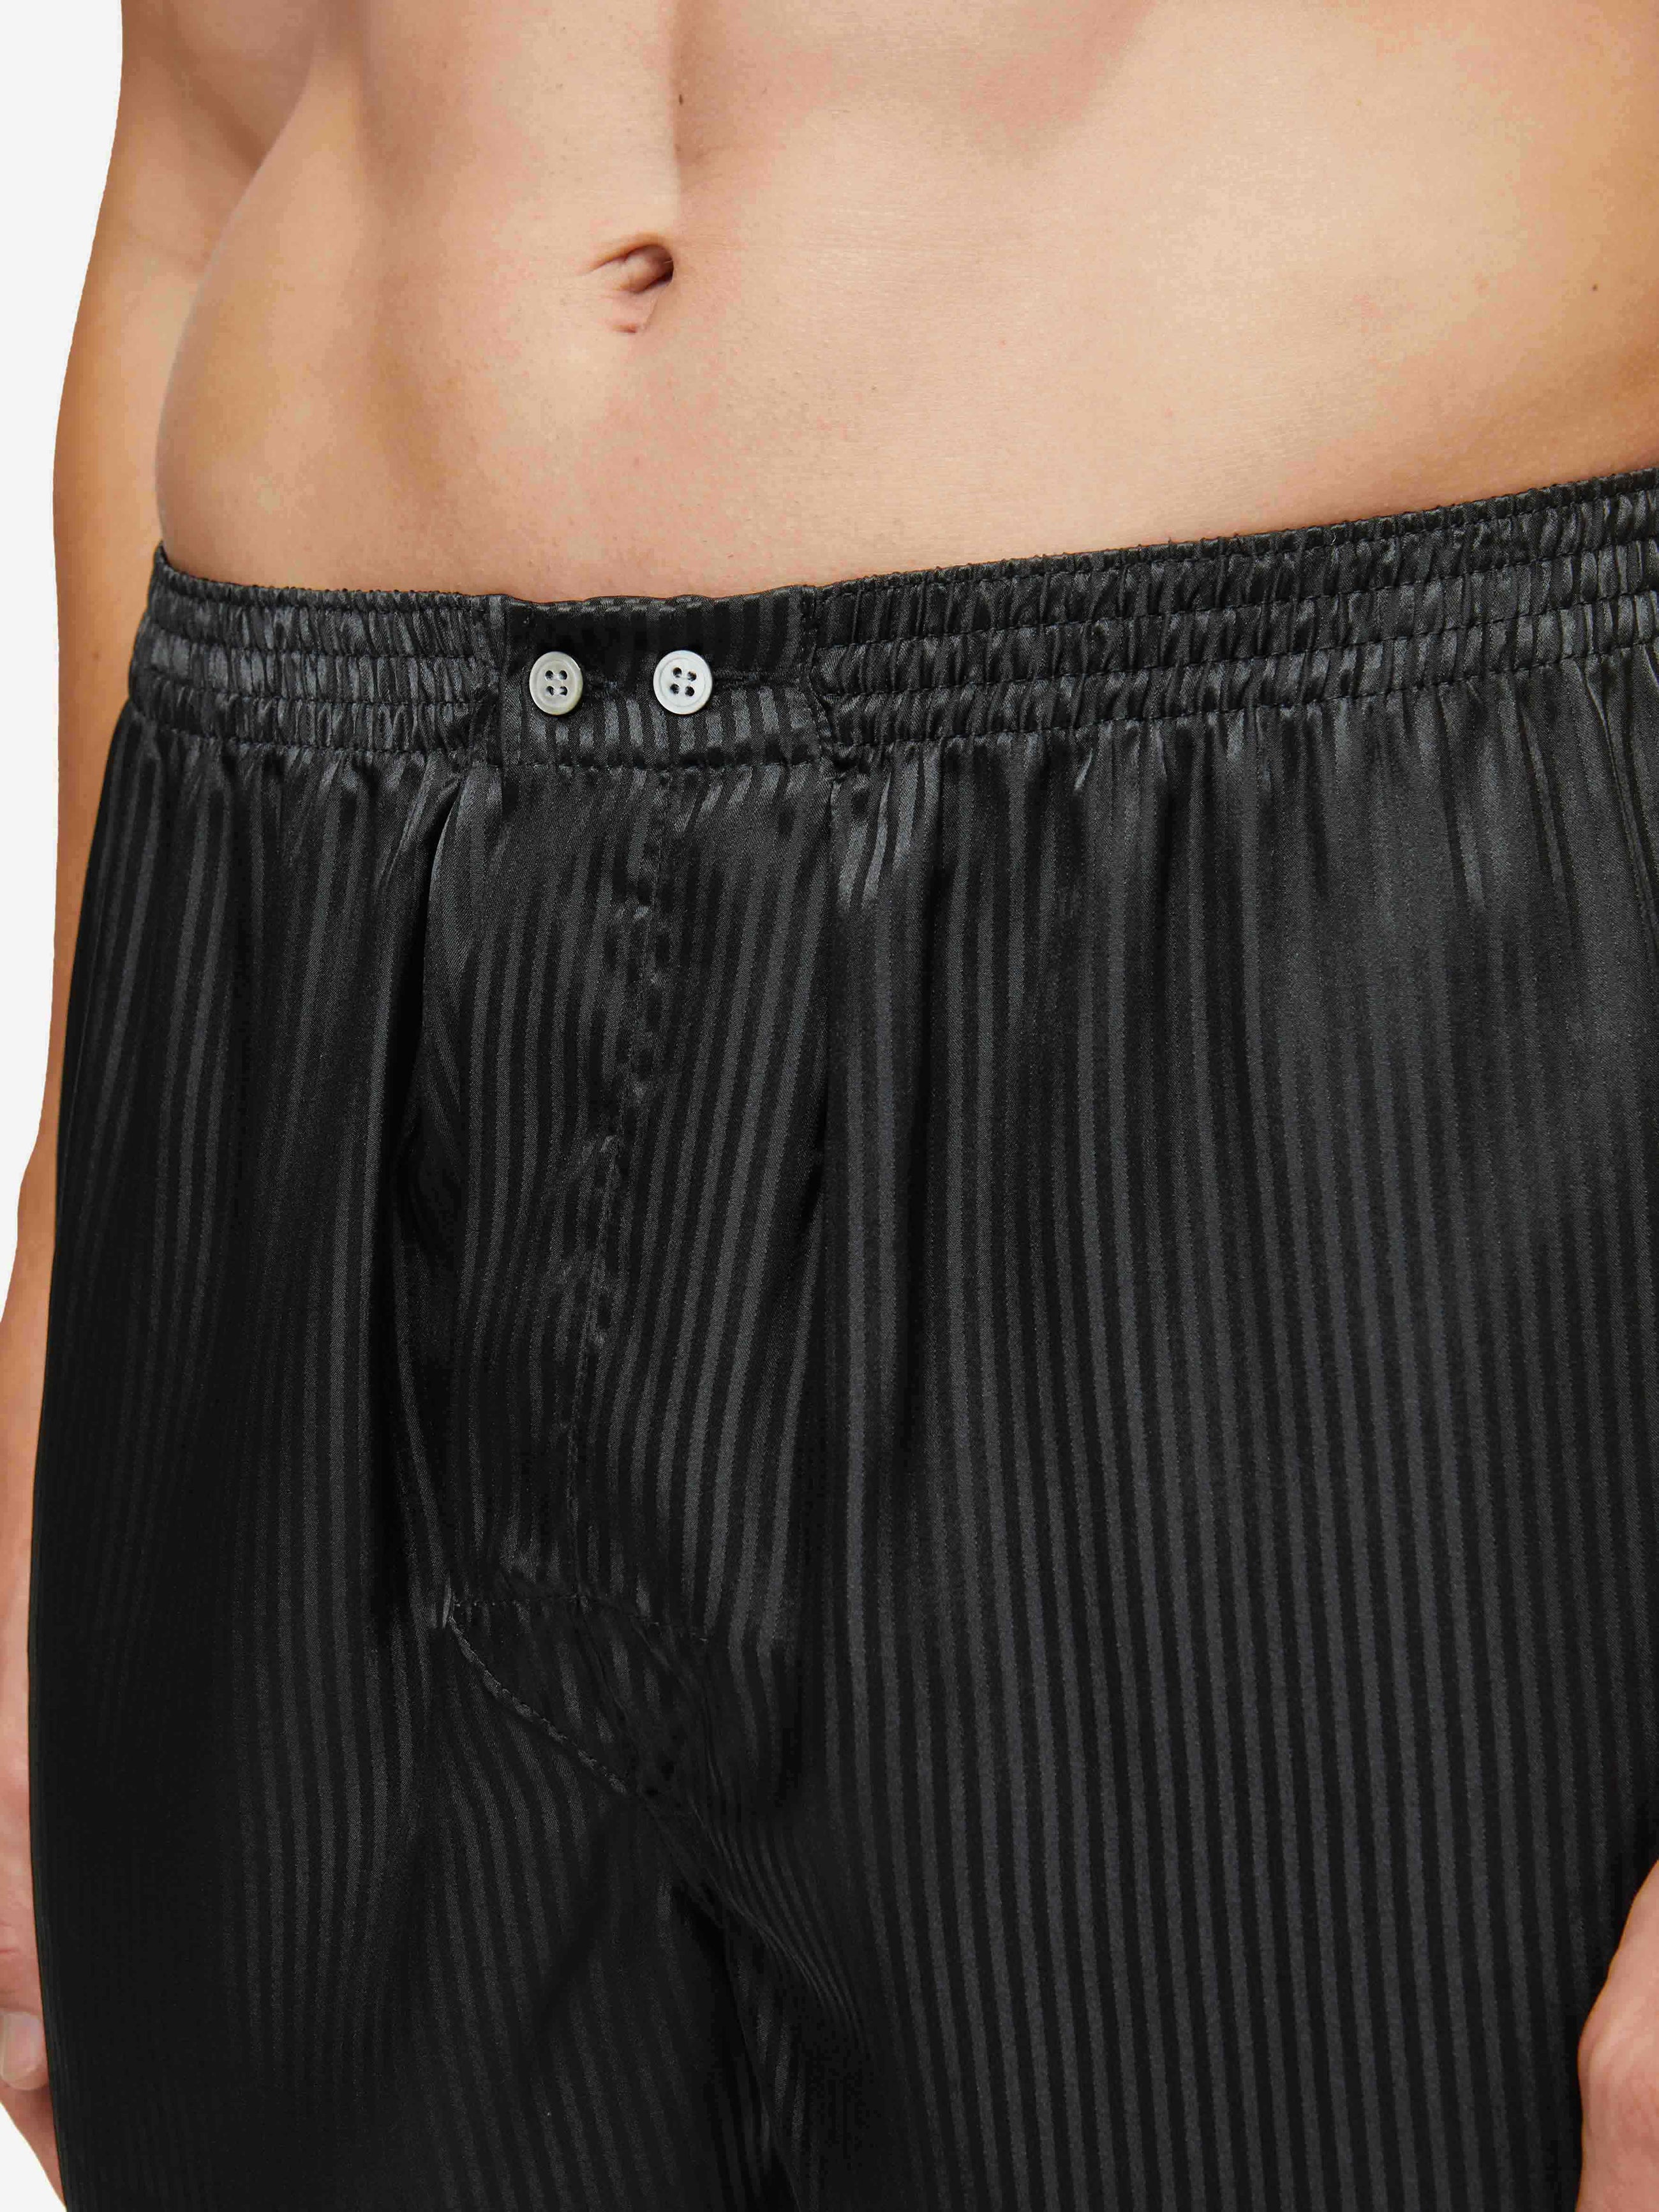 Men's Underwear Satin Boxers Black 